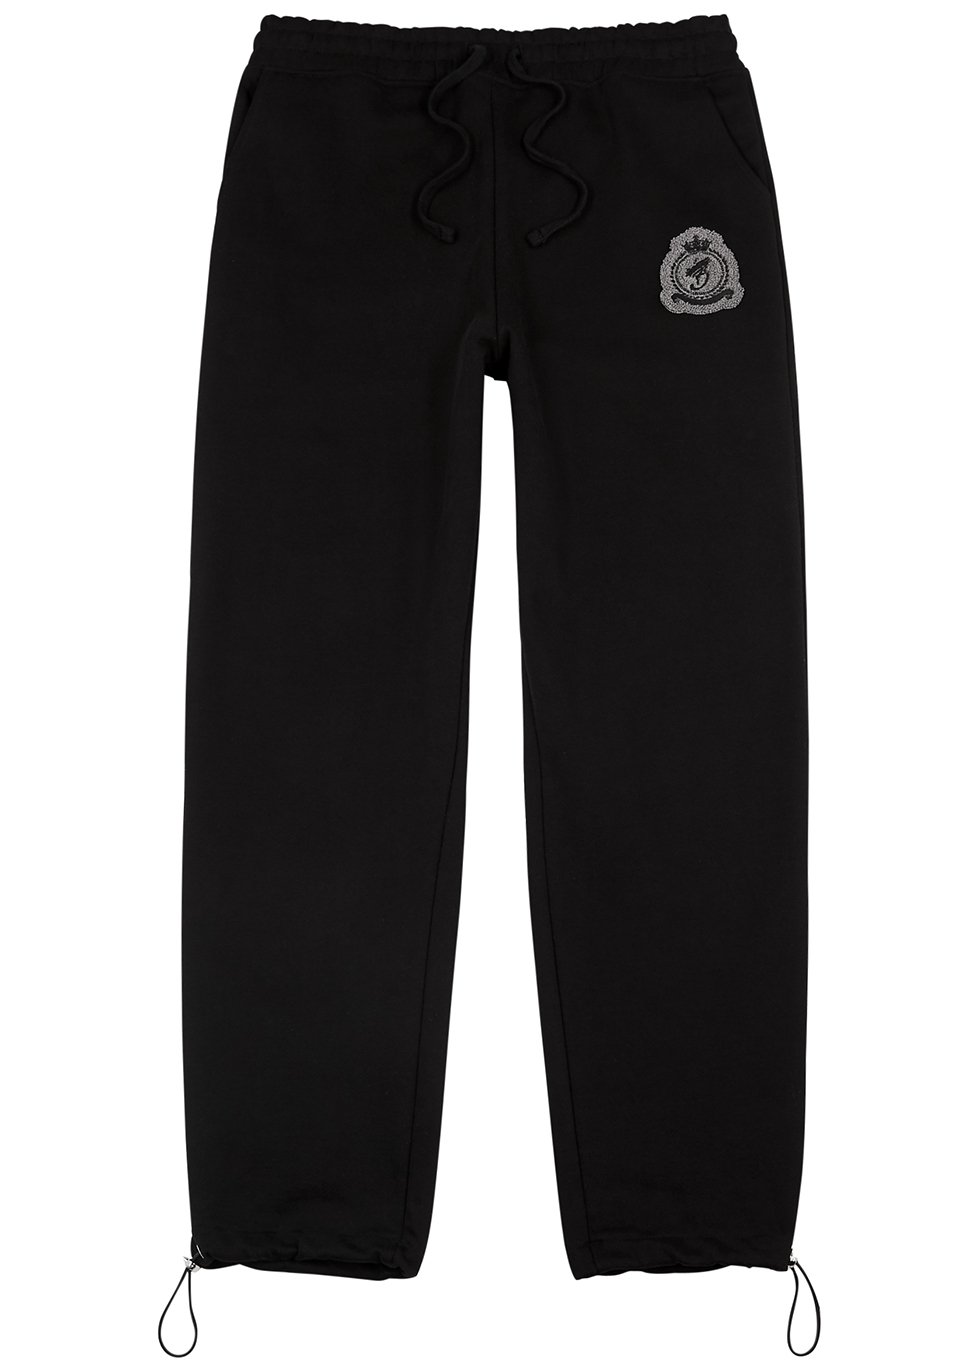 BENJART Black logo cotton sweatpants - Harvey Nichols